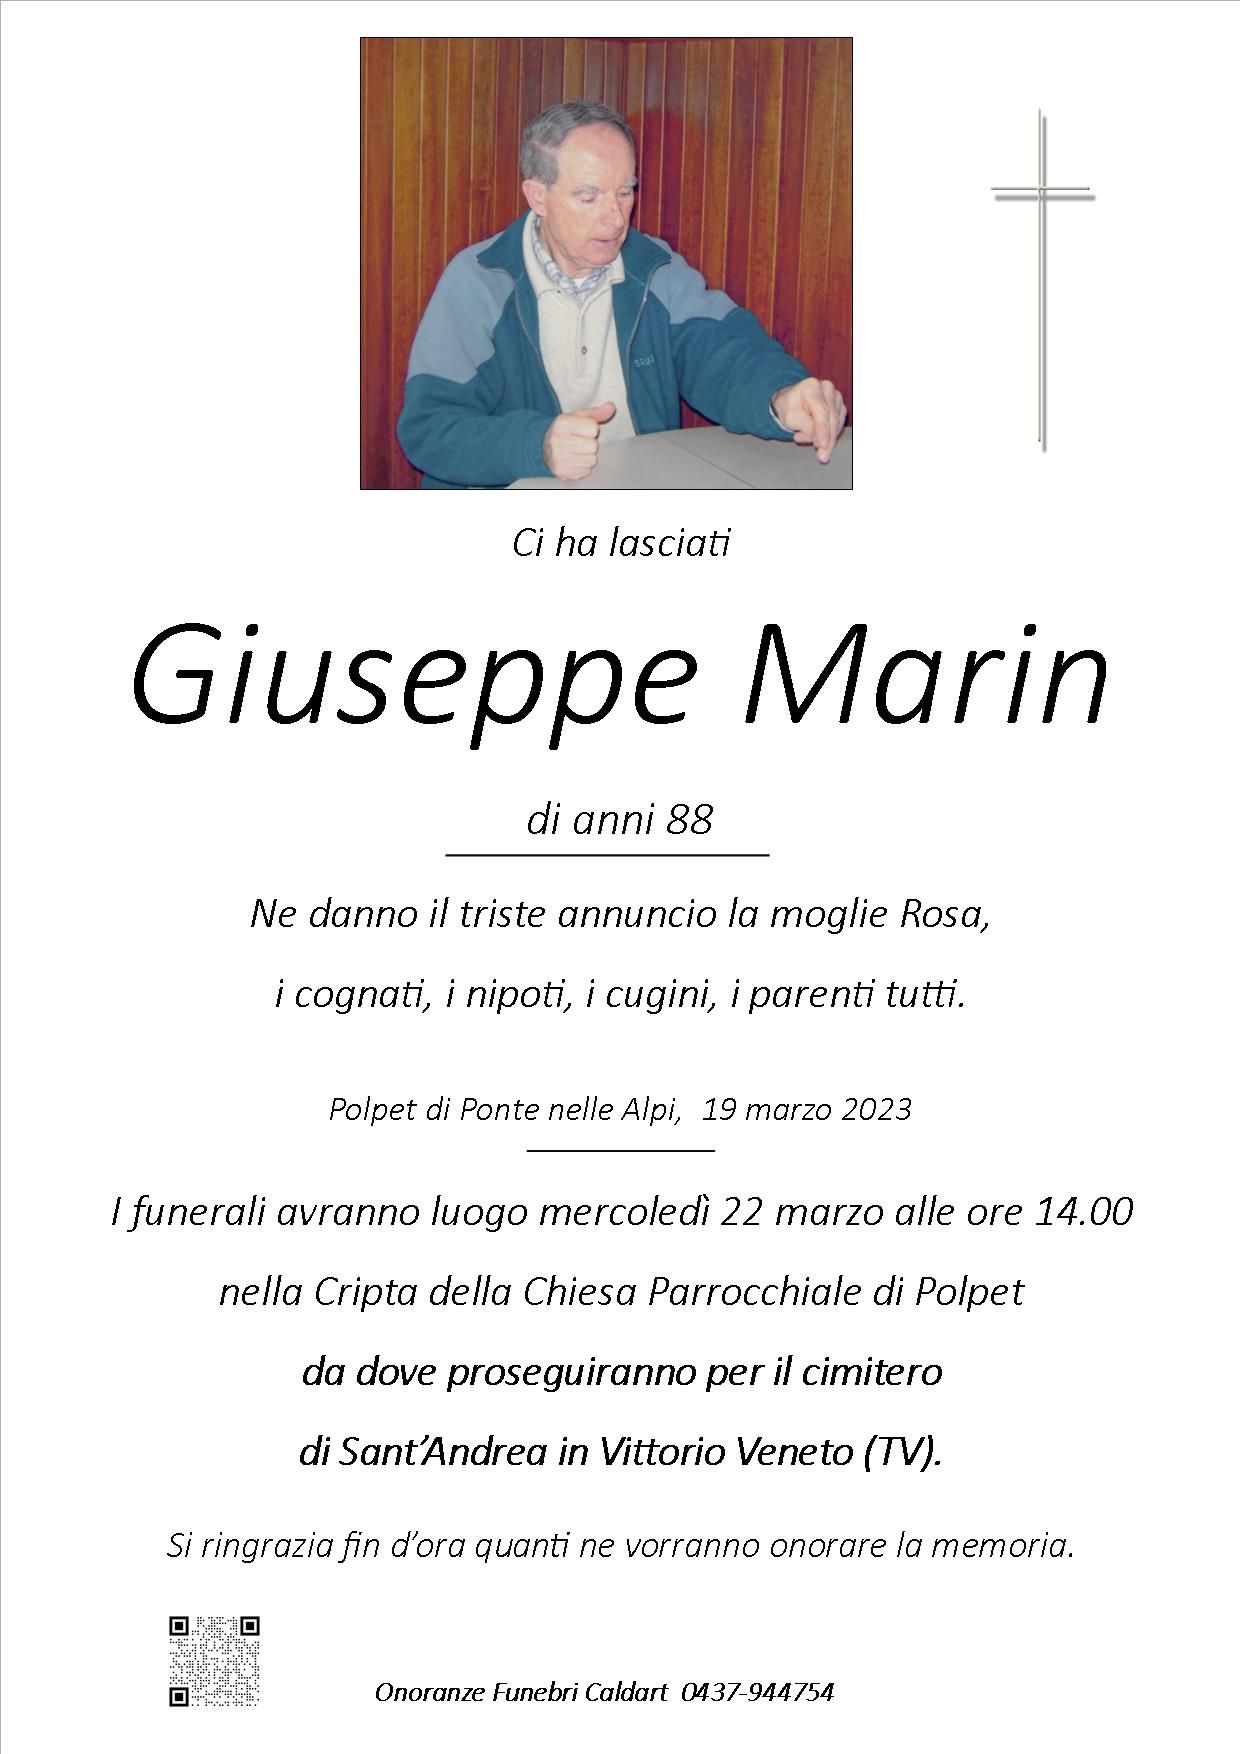 Marin Giuseppe